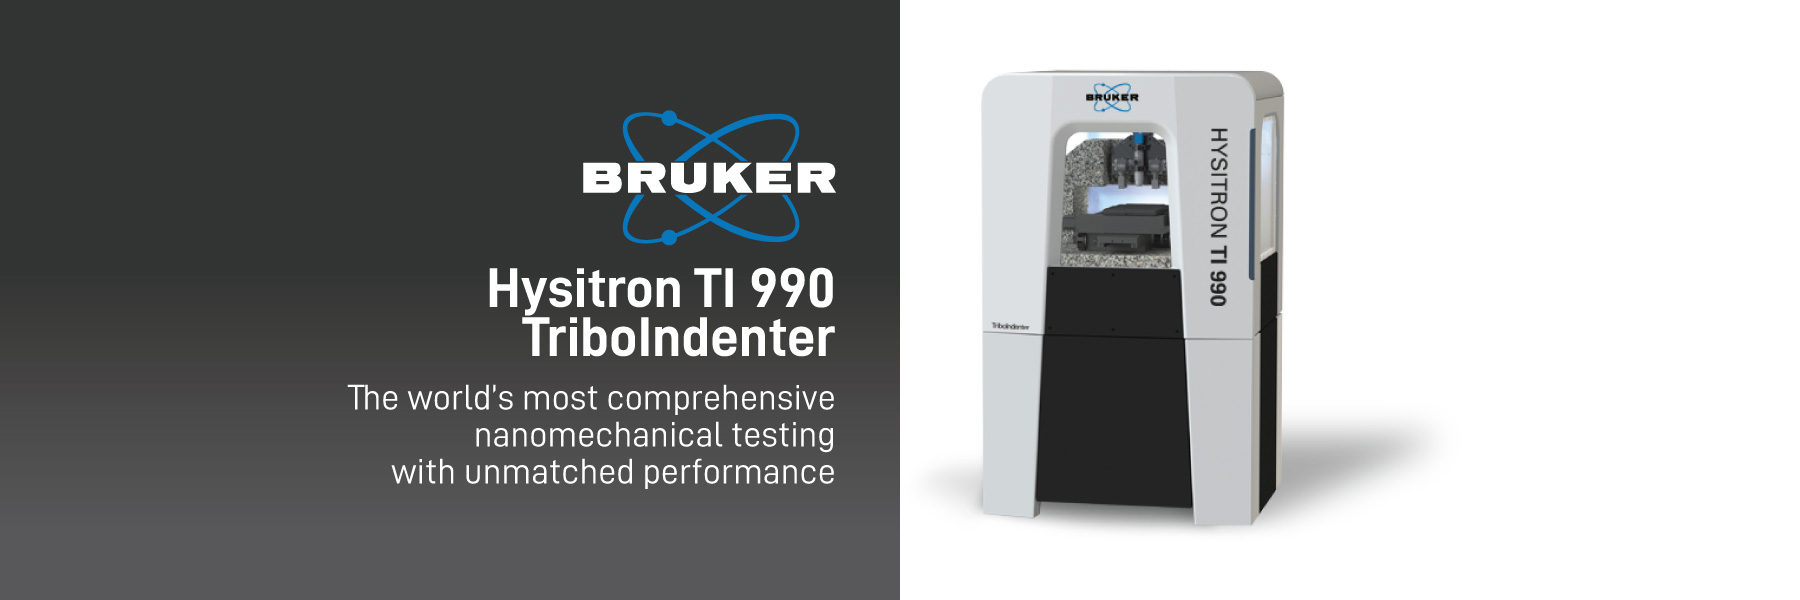 Bruker Hysitron TI 990 TriboIndenter